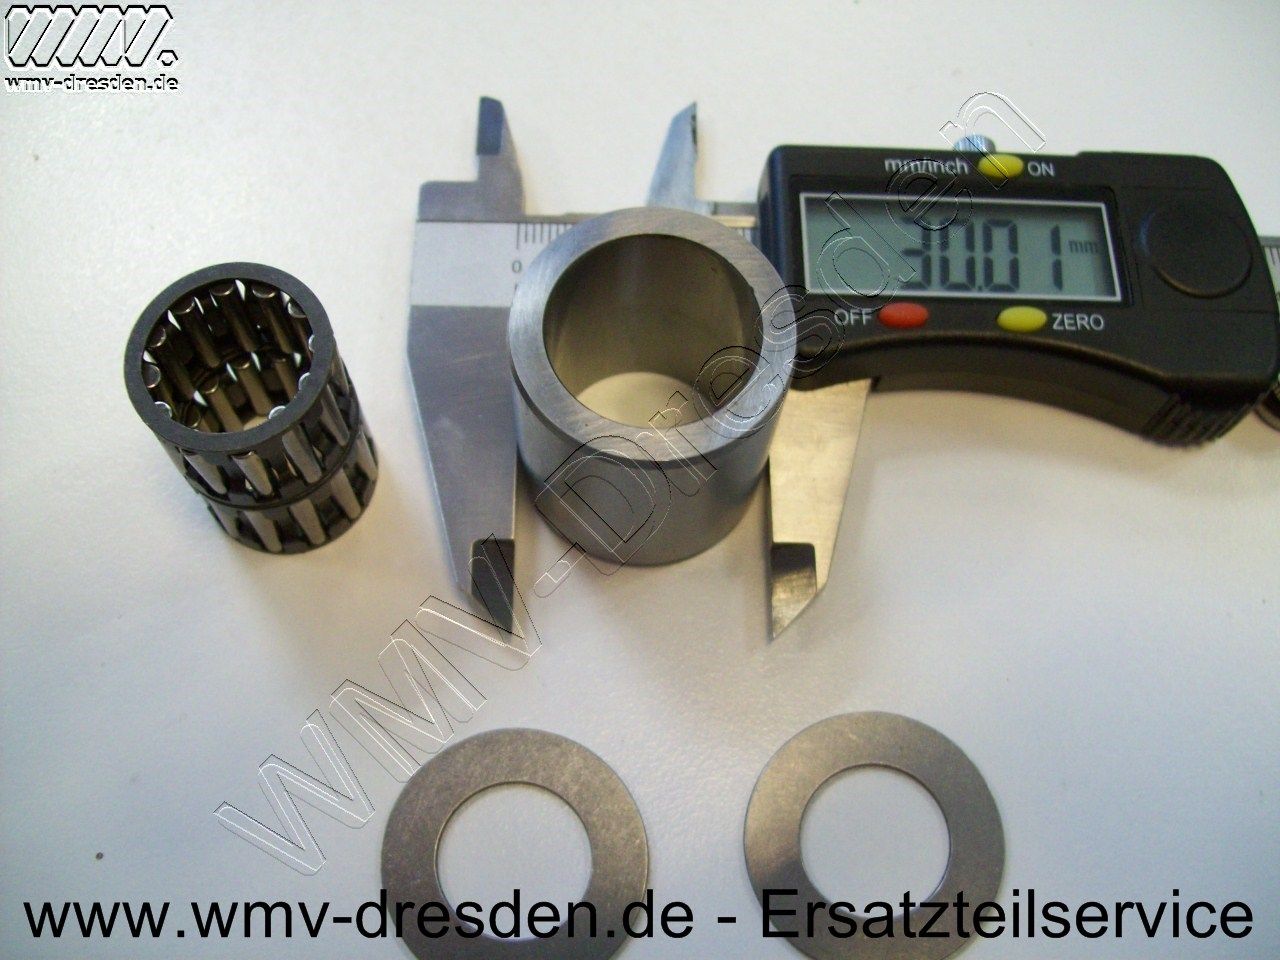 Artikel 1617000403-B17 Hersteller: Bosch-Skil-Dremel 